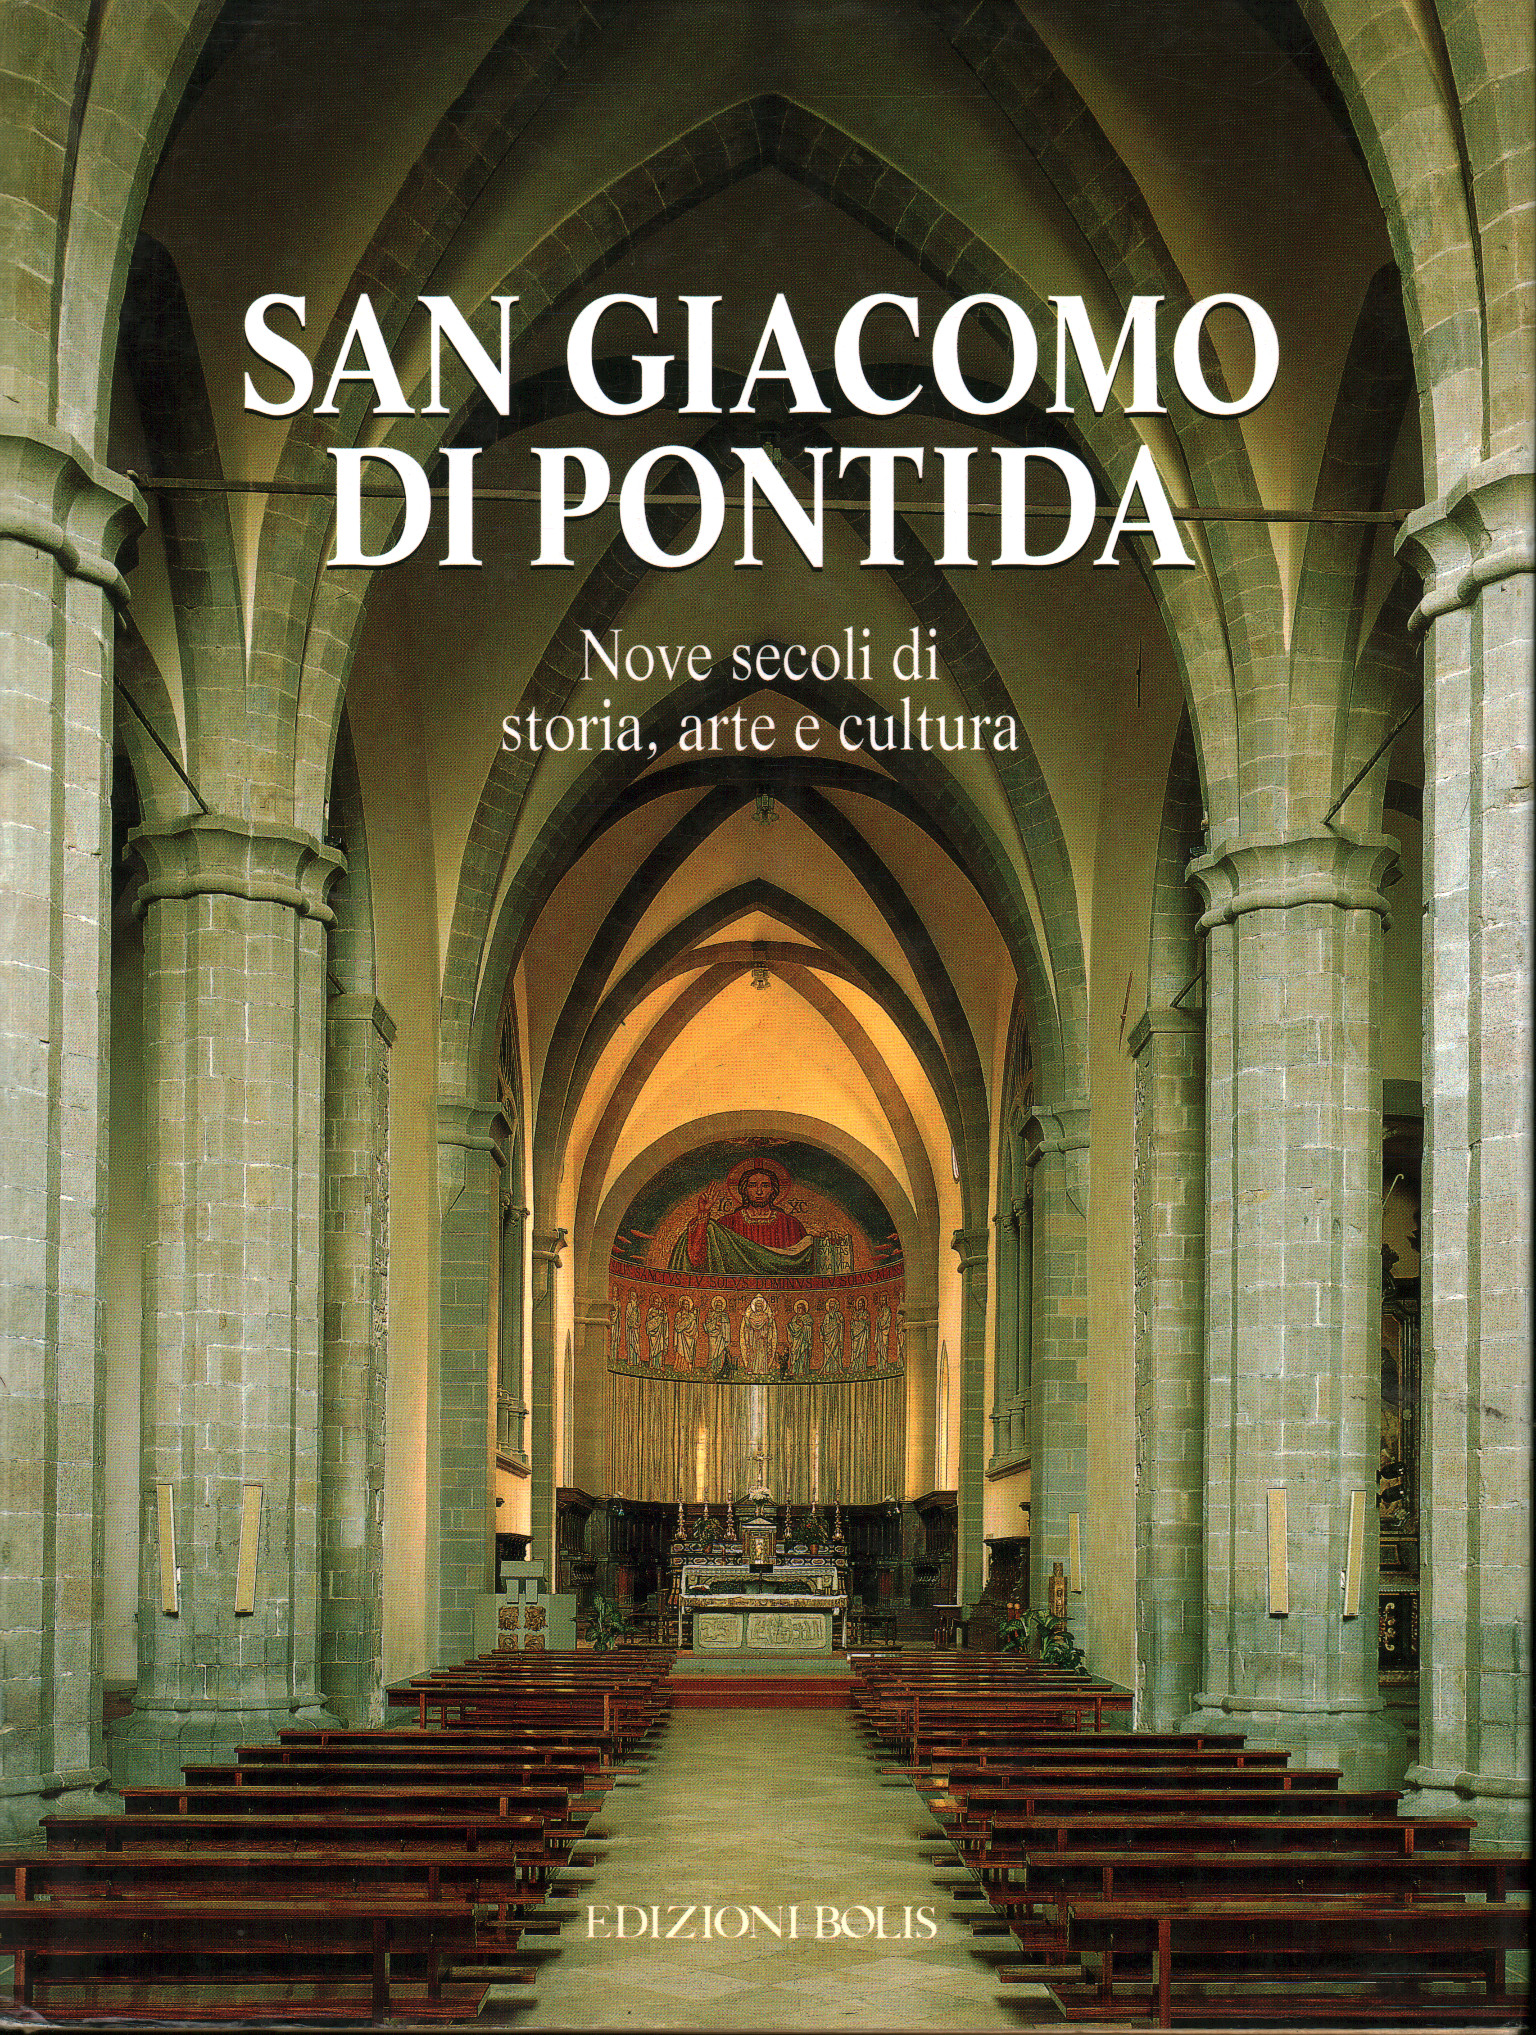 San Giacomo di Pontida, Giovanni Spinelli